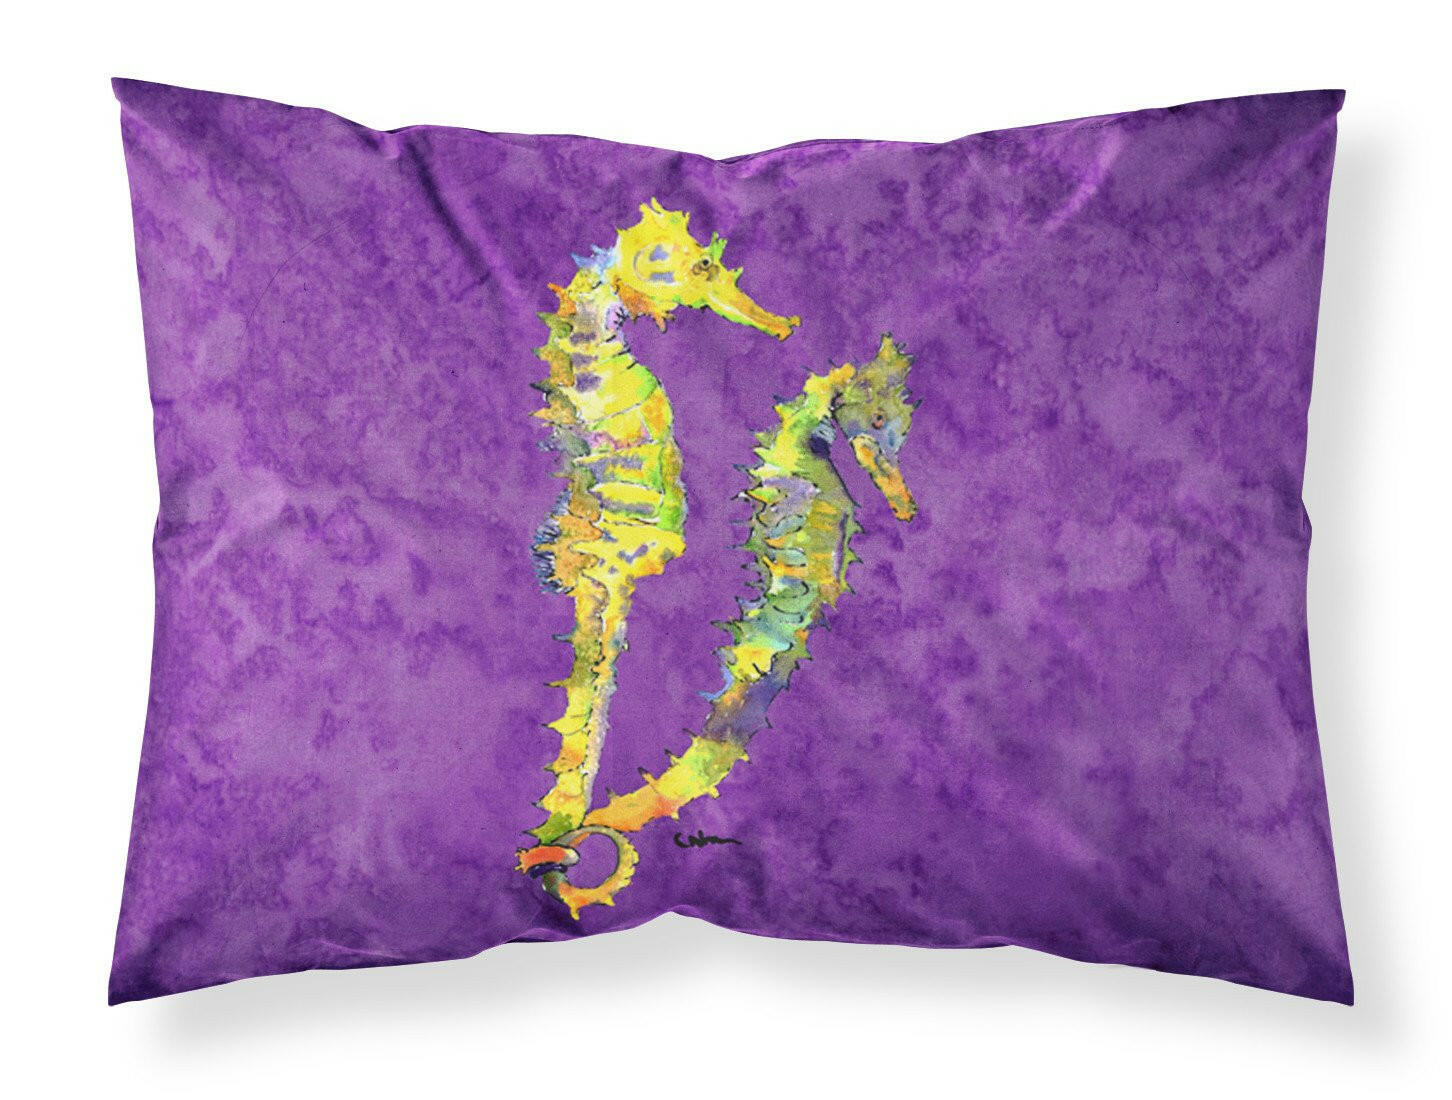 Seahorse  Moisture wicking Fabric standard pillowcase by Caroline's Treasures